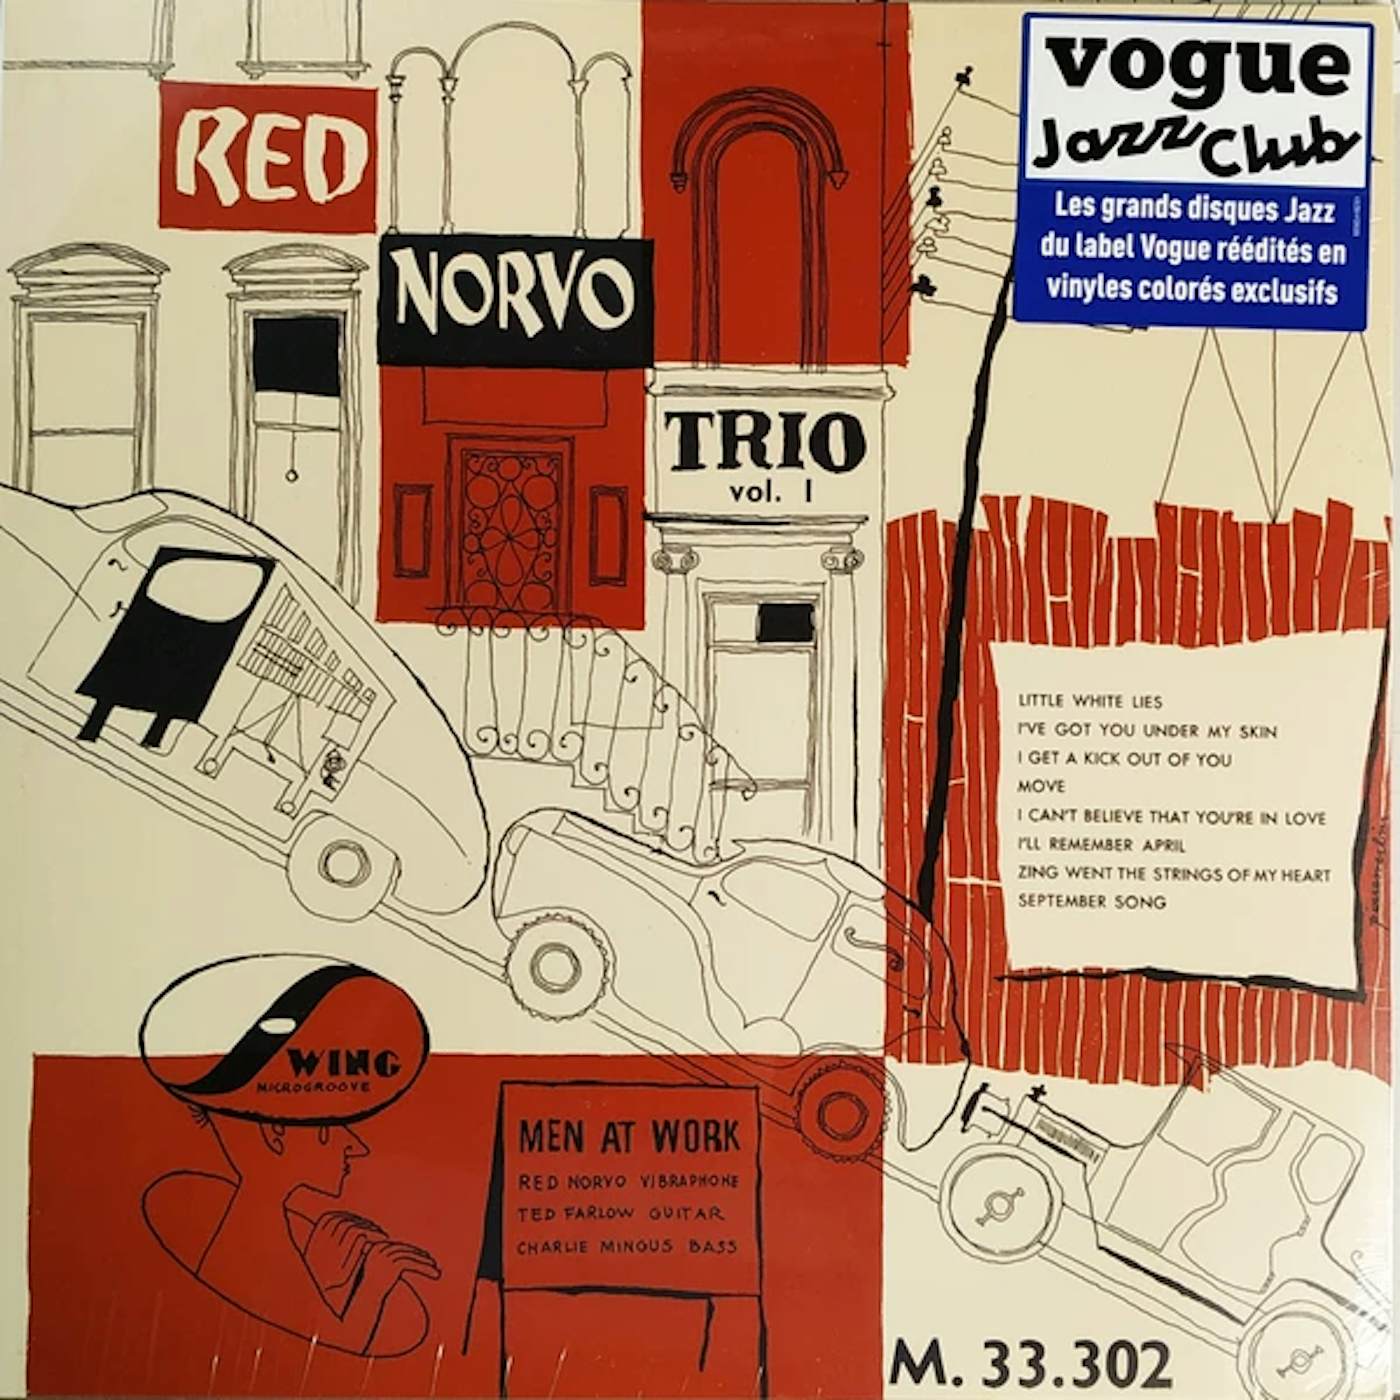 Red Norvo MEN AT WORK VOL 1 Vinyl Record